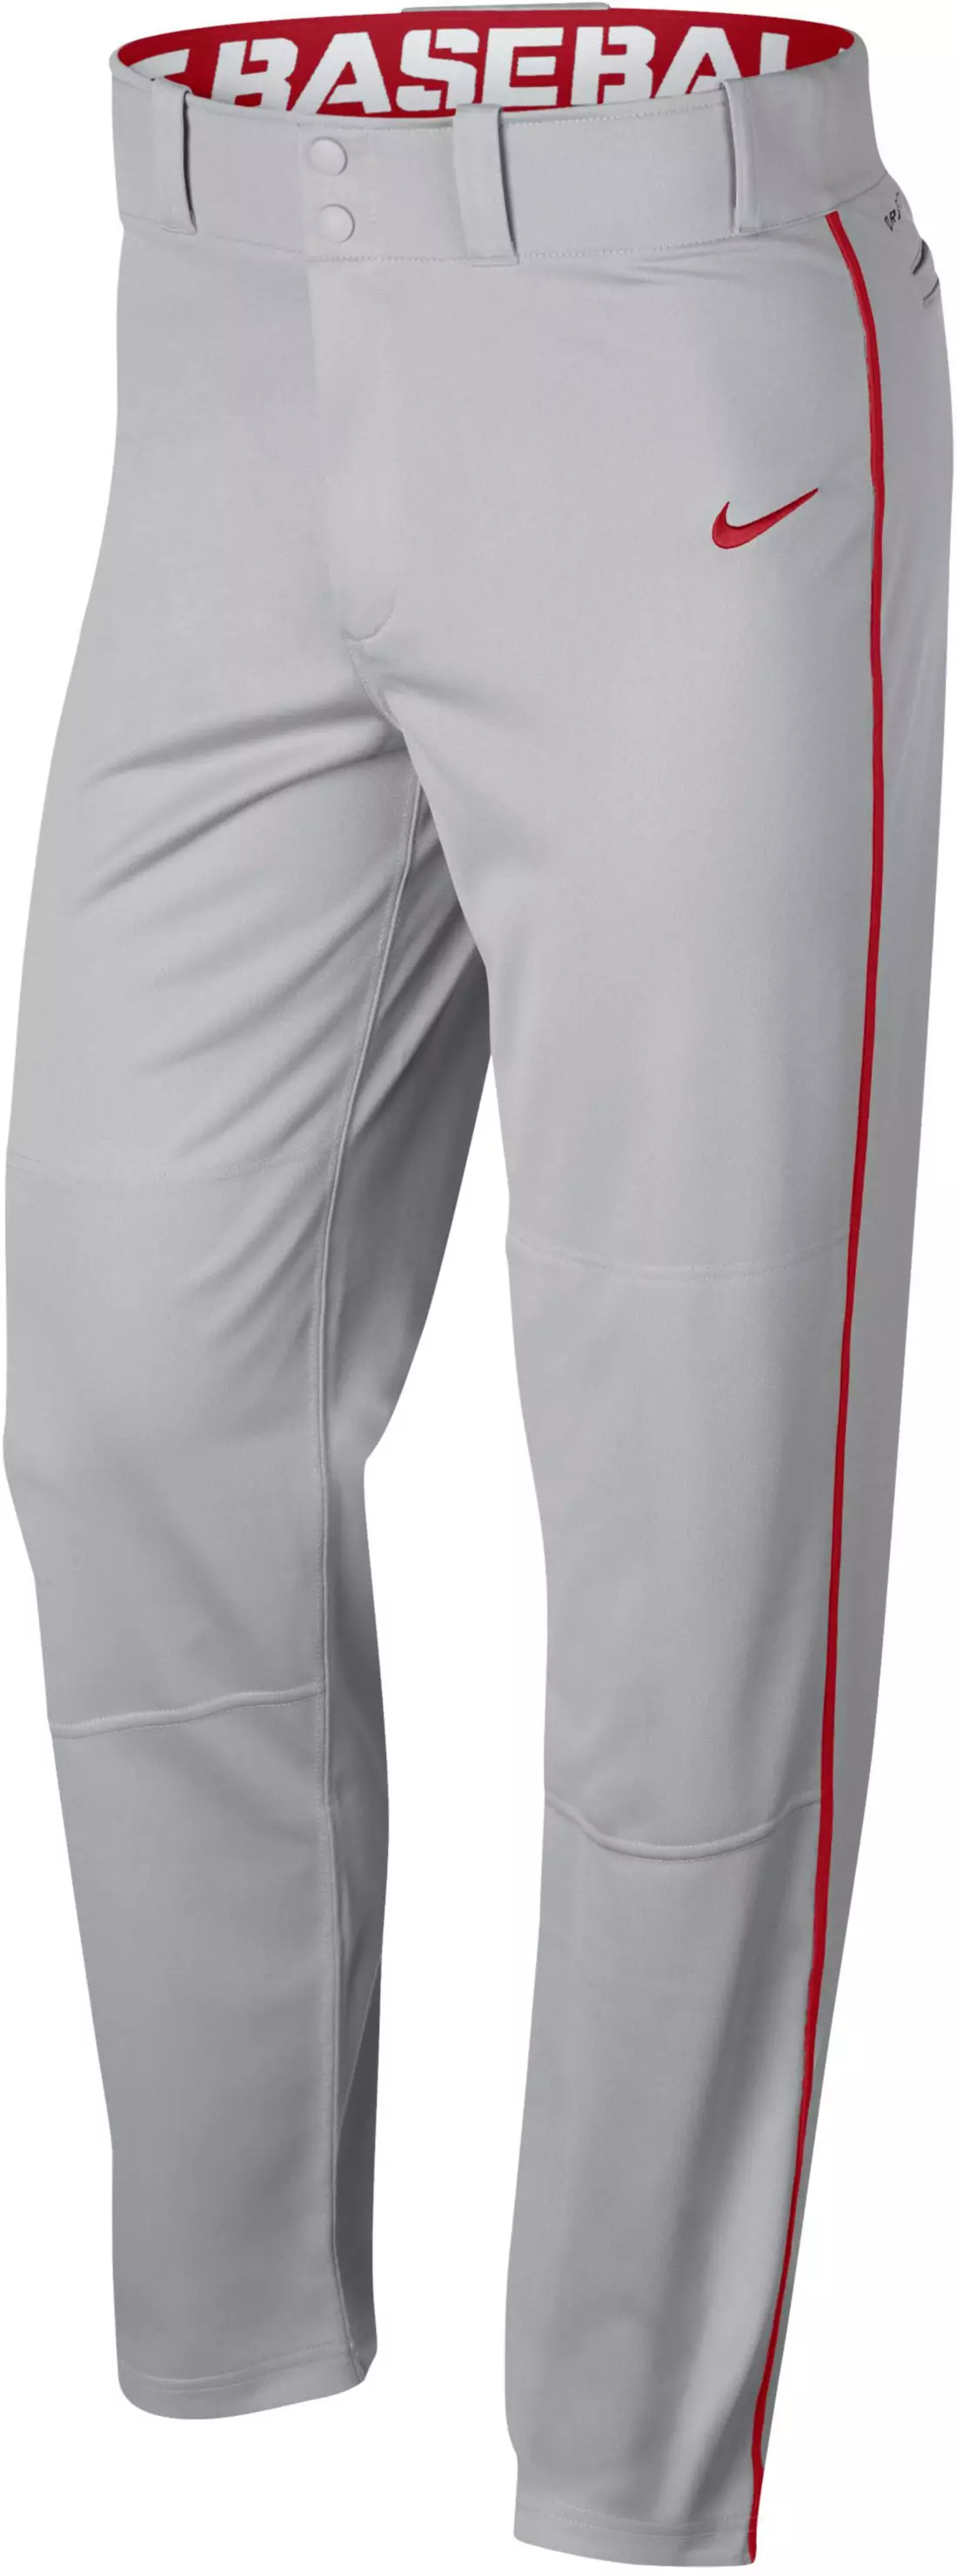 Nike Men's Vapor Gray Long pants w/RED piping